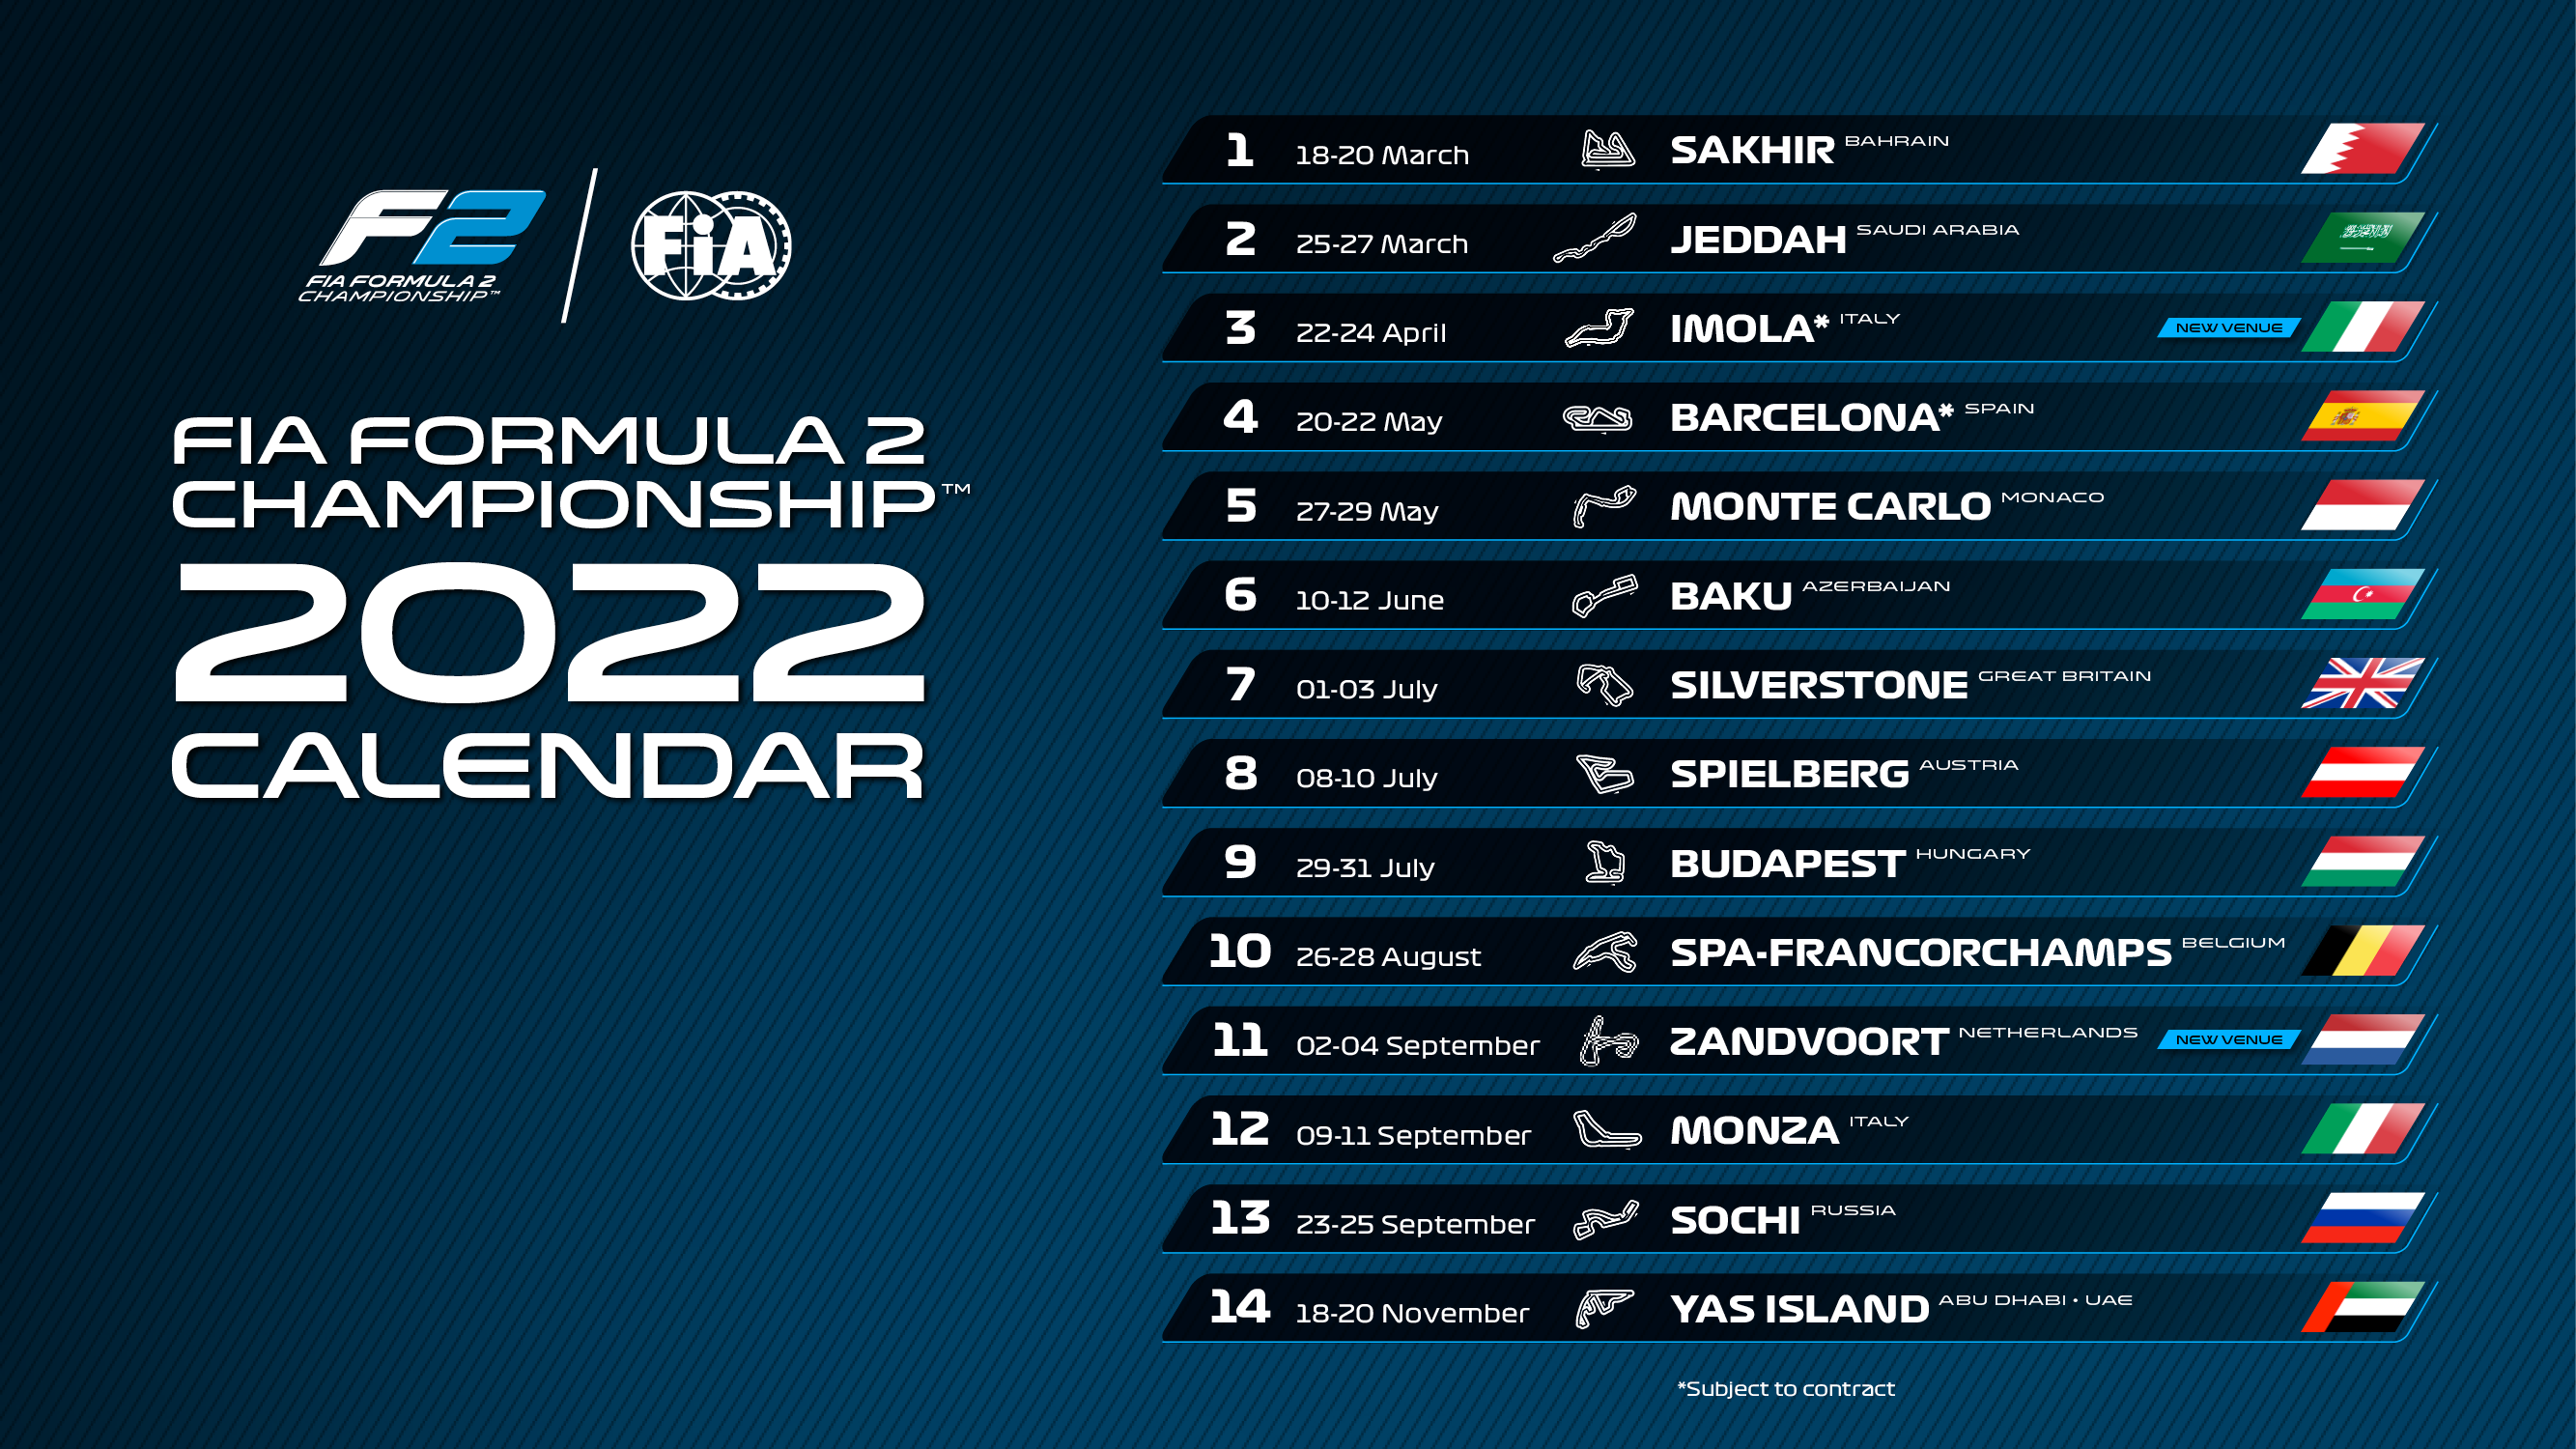 F1 Calendar 2022. Formula 2 2022. Формула 1 2022 календарь. Формула 2 2022 календарь.